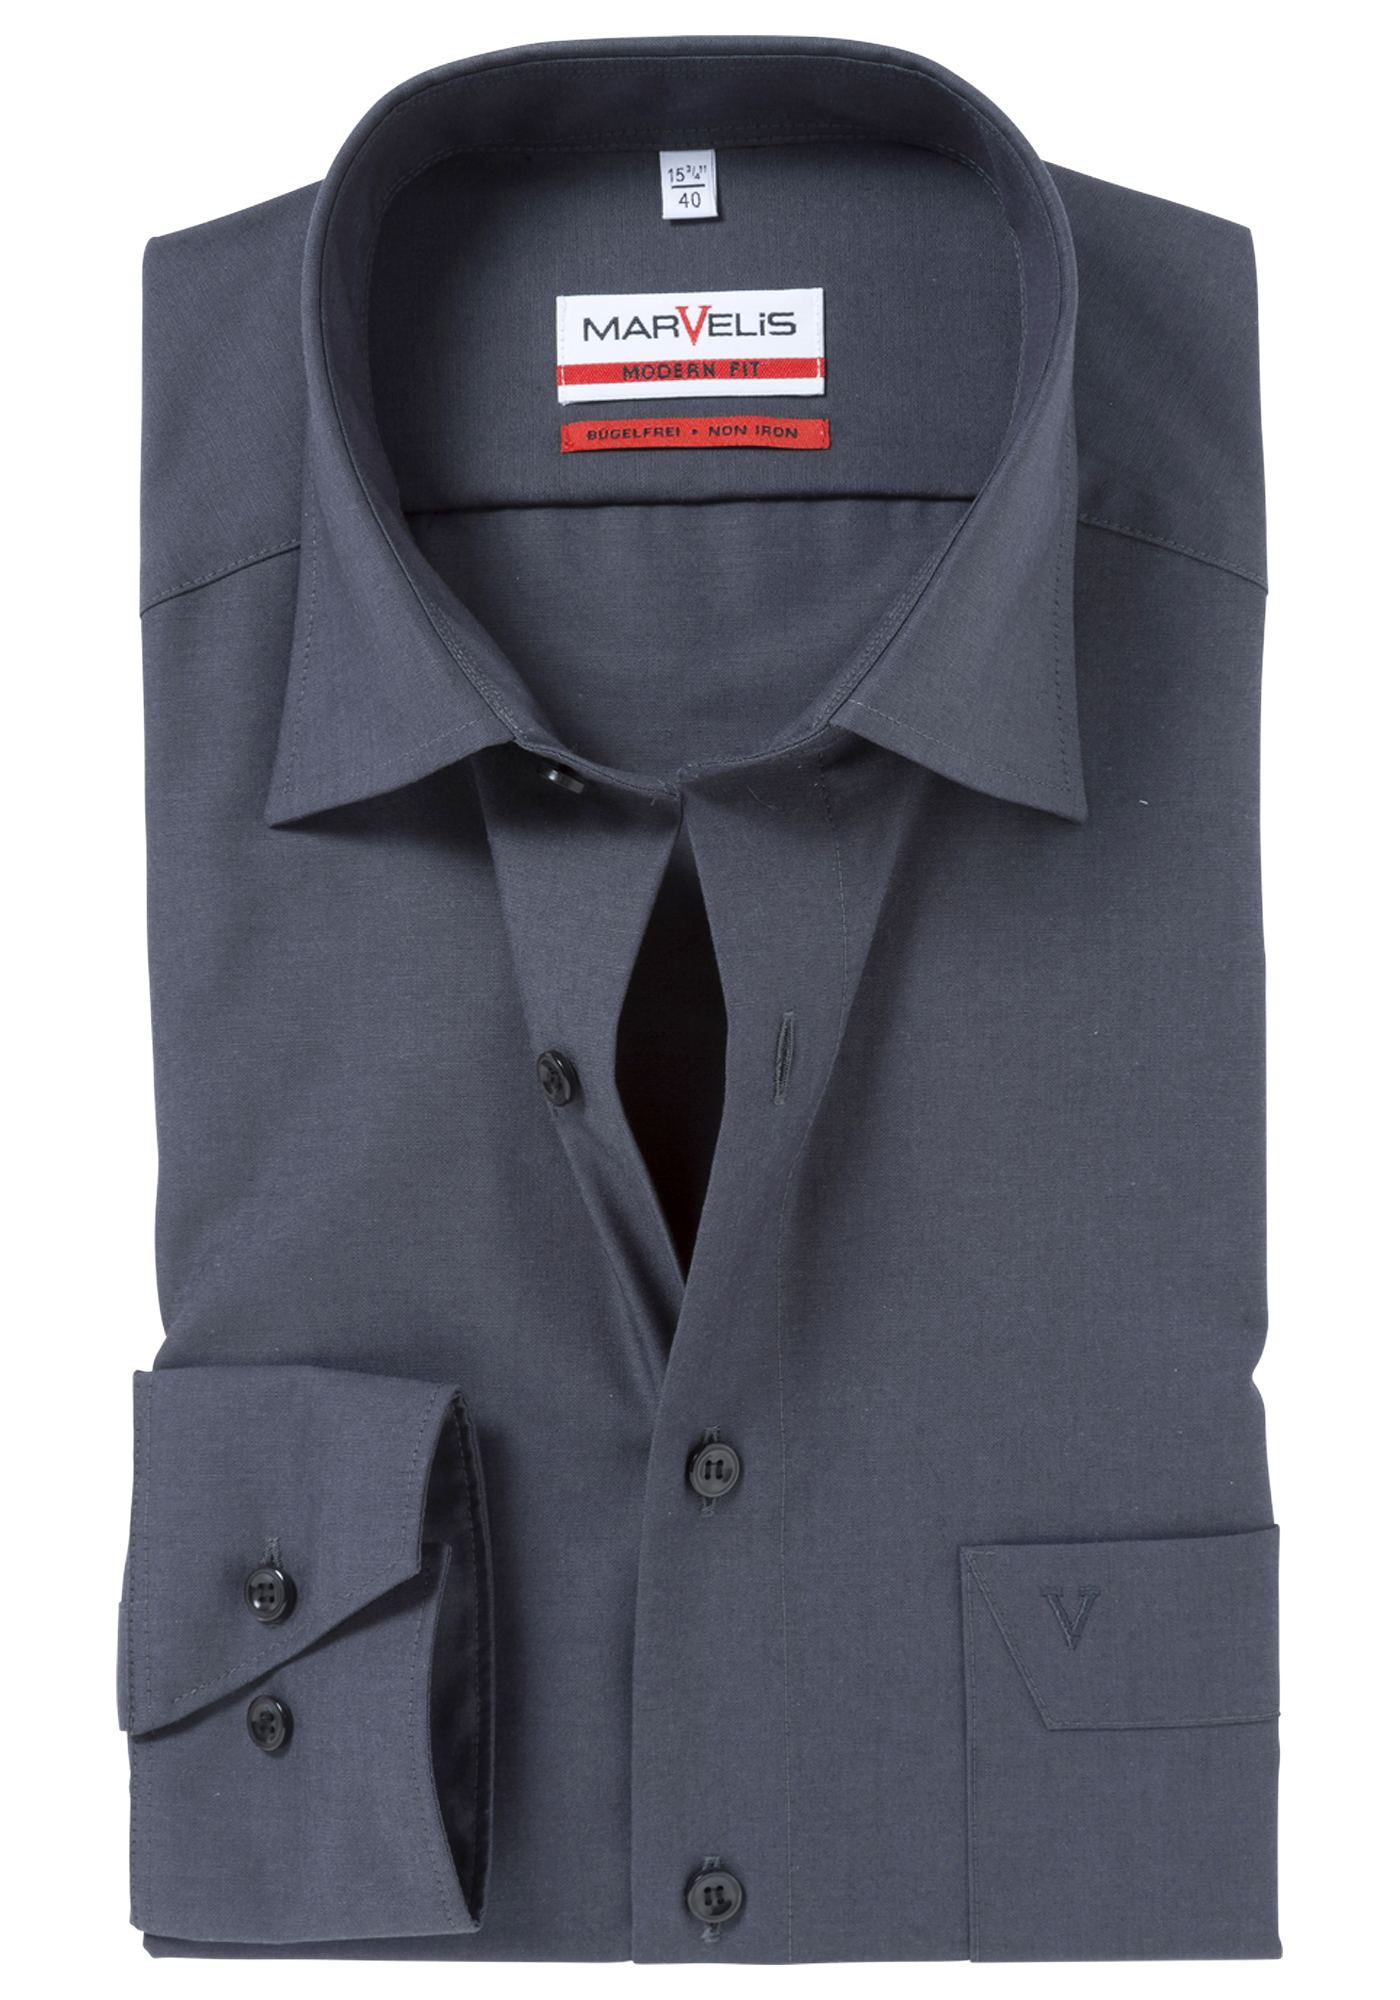 MARVELIS modern fit overhemd, antraciet grijs